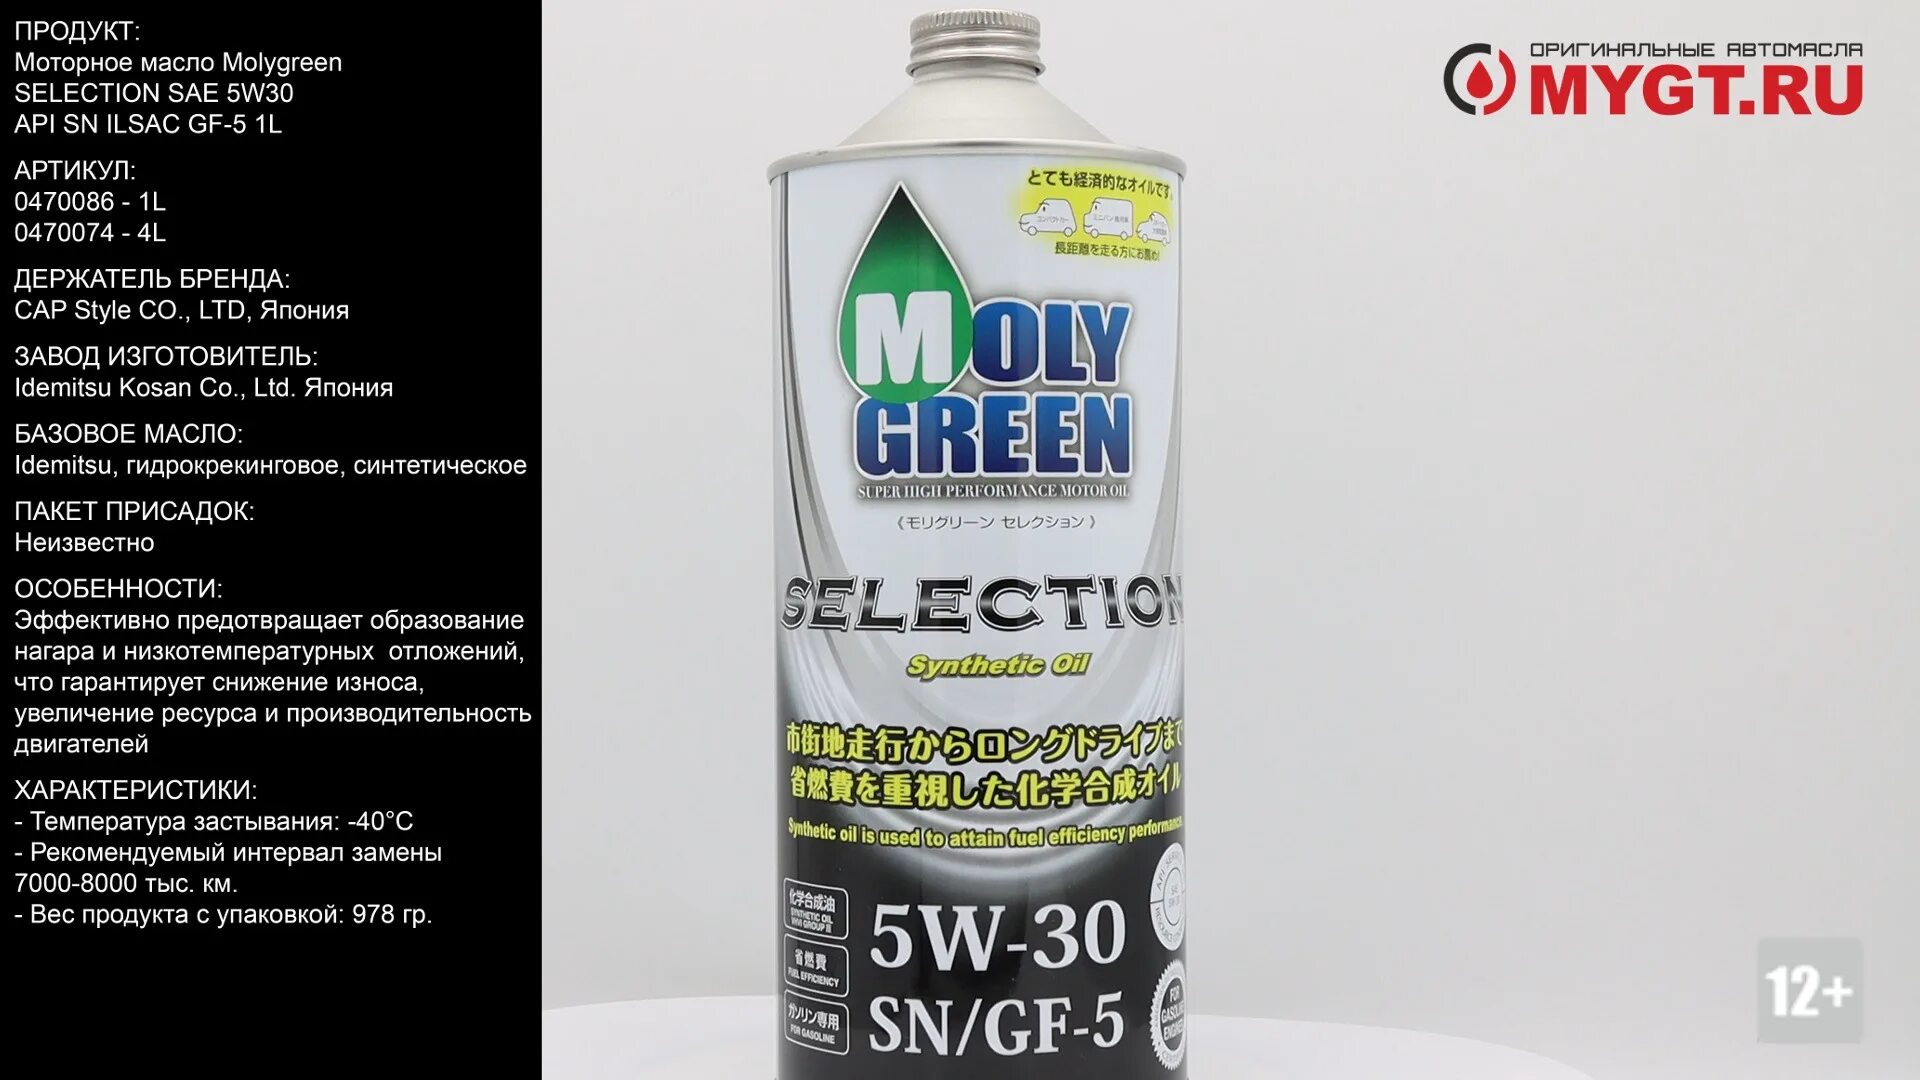 5w 30 ilsac gf 6a. Moly Green 5w30 selection. Масло Moly Green 5w30 selection. Moly Green selection 5w30 4л 0470074. Moly Green Premium Black SAE 5w-30 API SN ILSAC gf-5 4l 0470022.